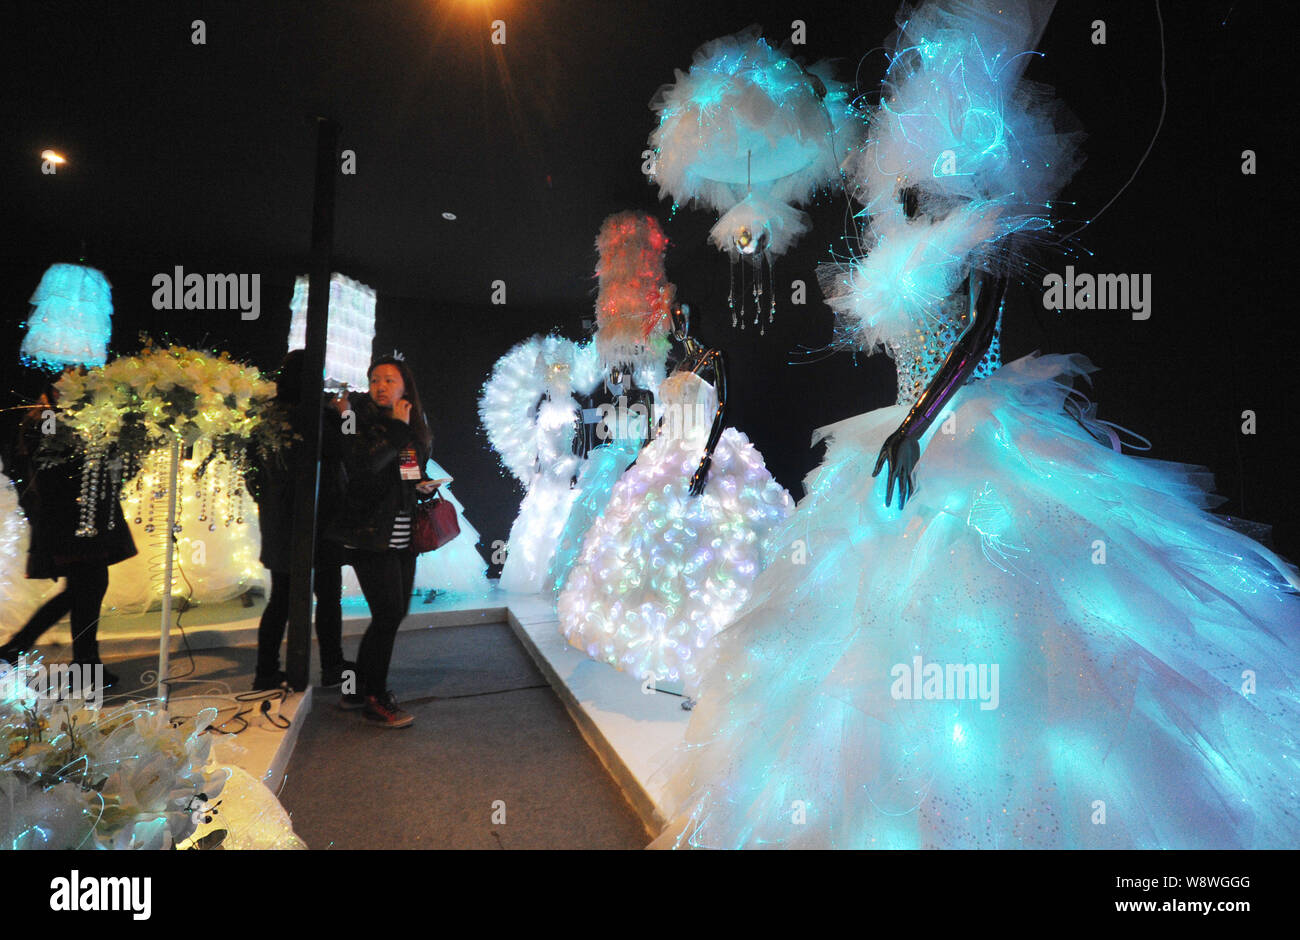 Visitors look at illuminated fibre optic wedding dresses on display at the China Wedding Expo 2014 in Shanghai, China, 24 February 2014.   The China W Stock Photo